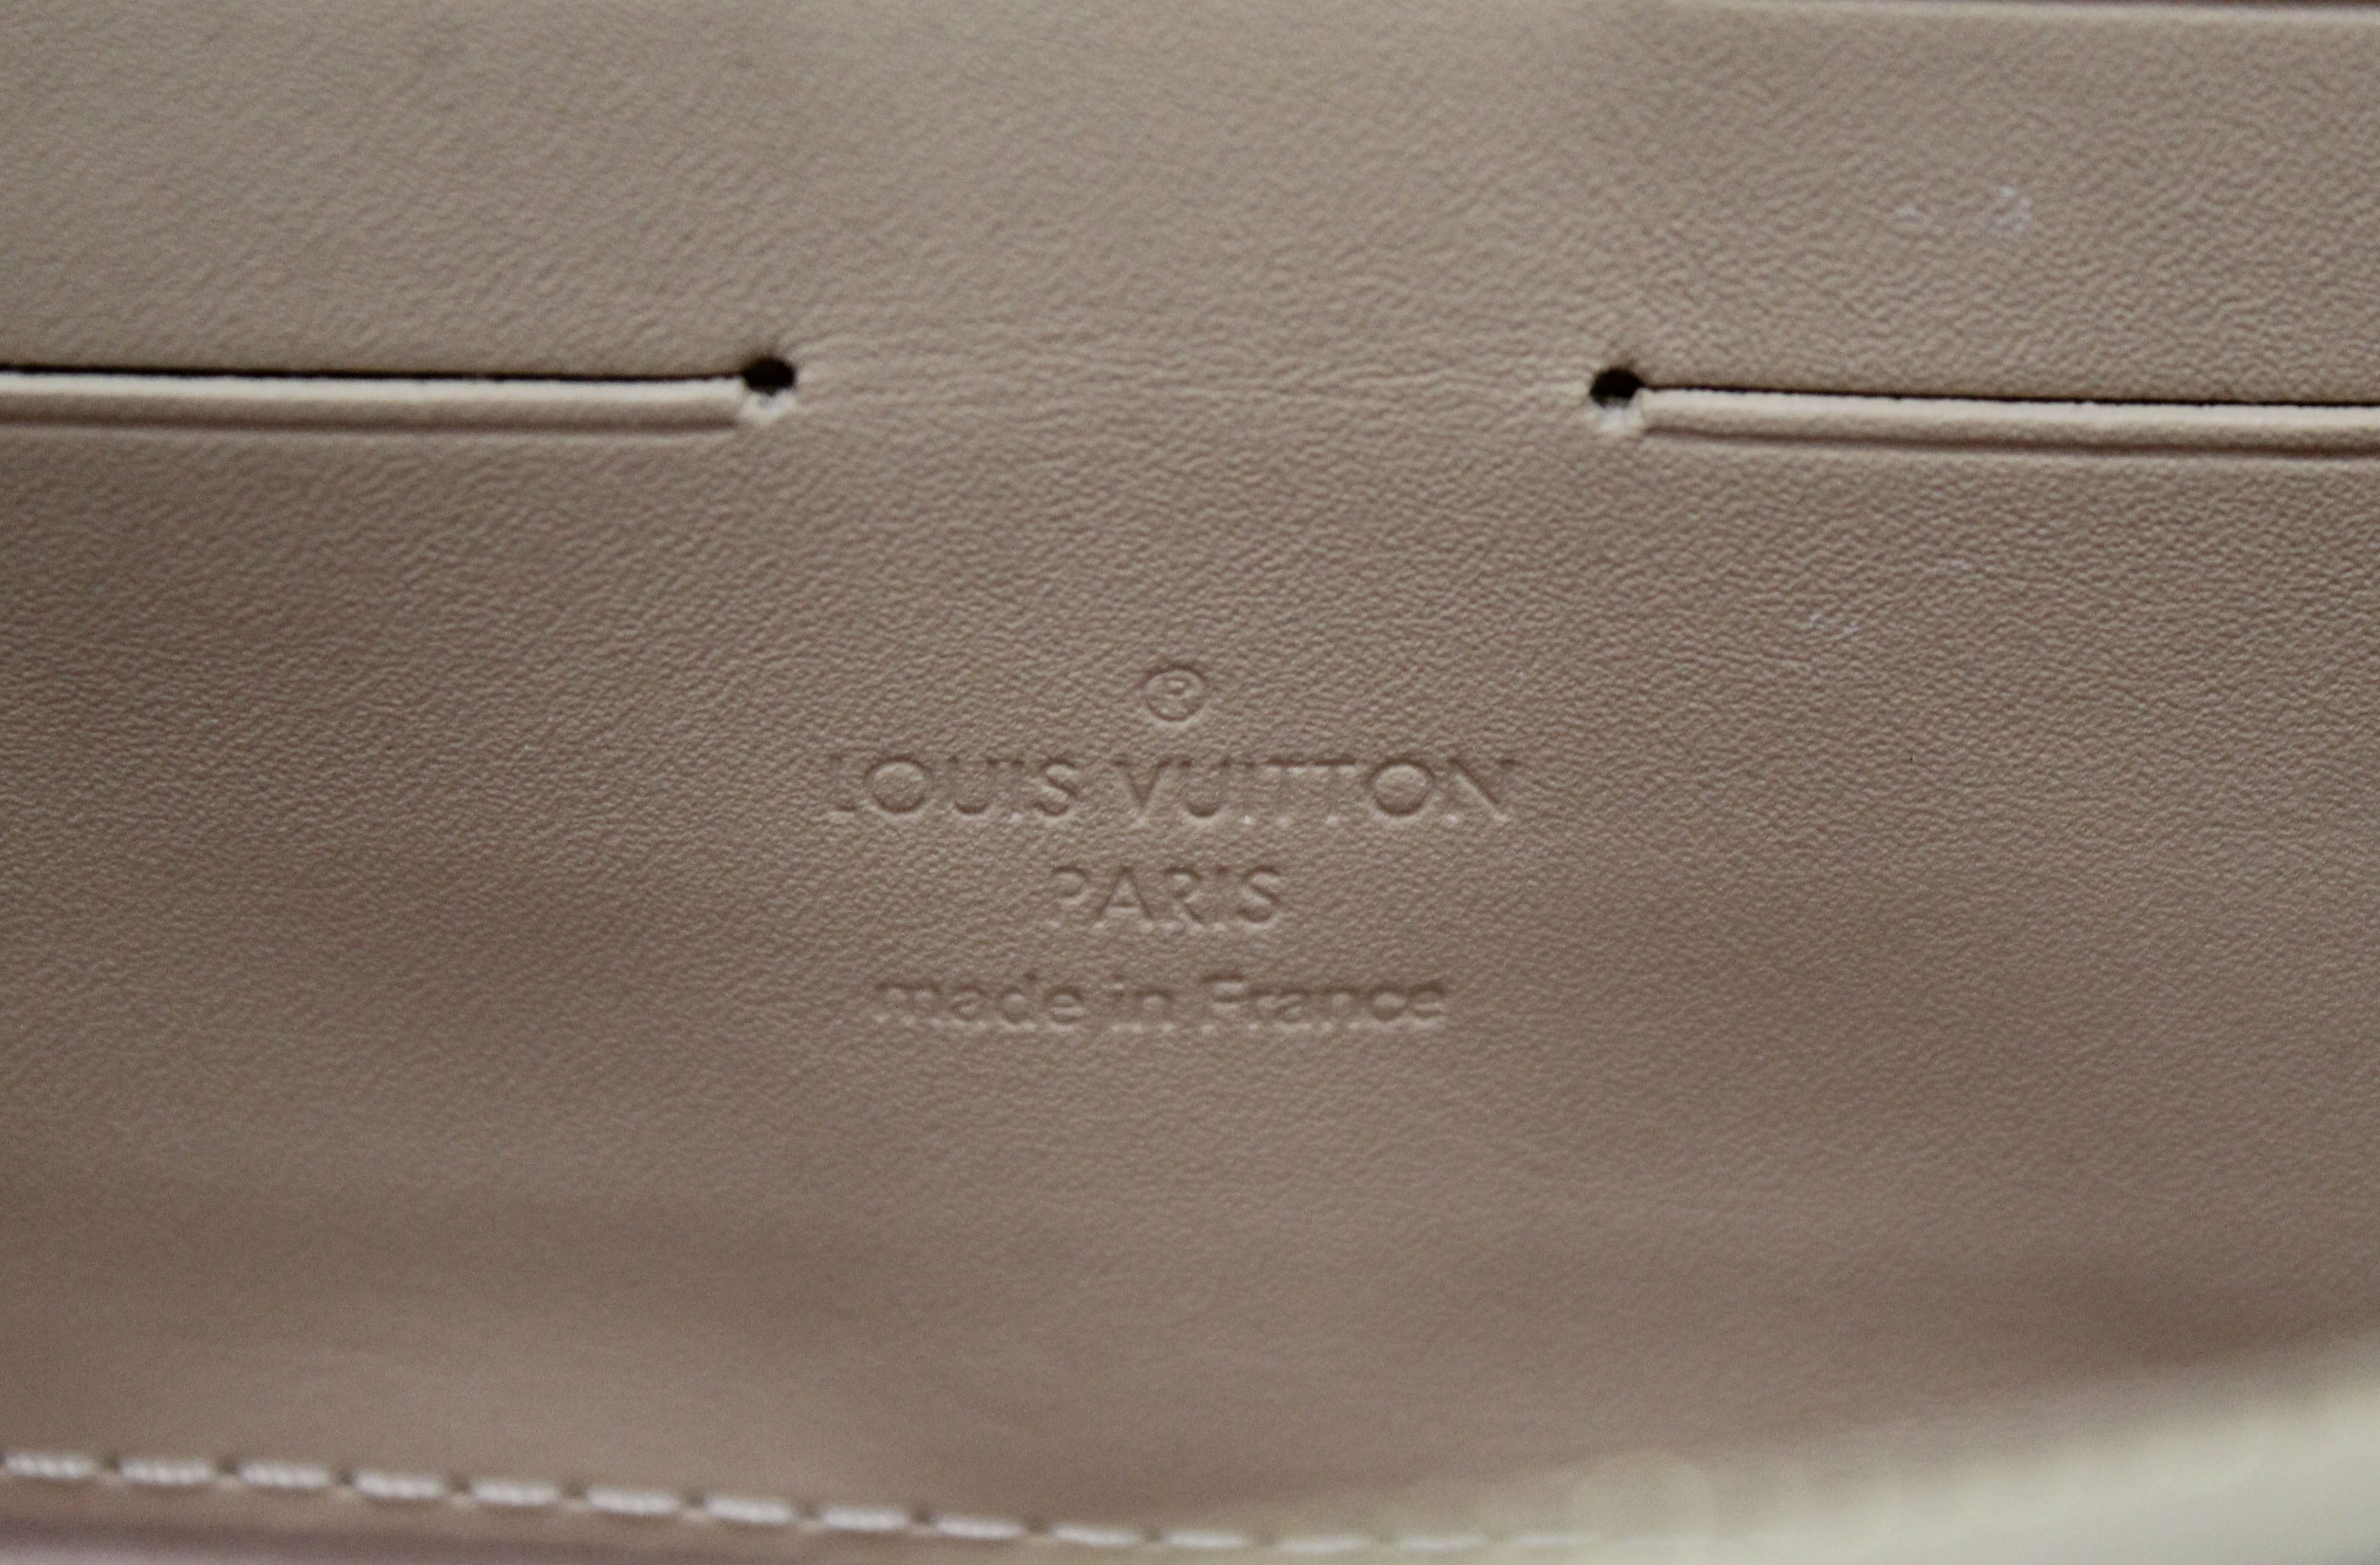 Louis Vuitton Sunset Boulevard, Review